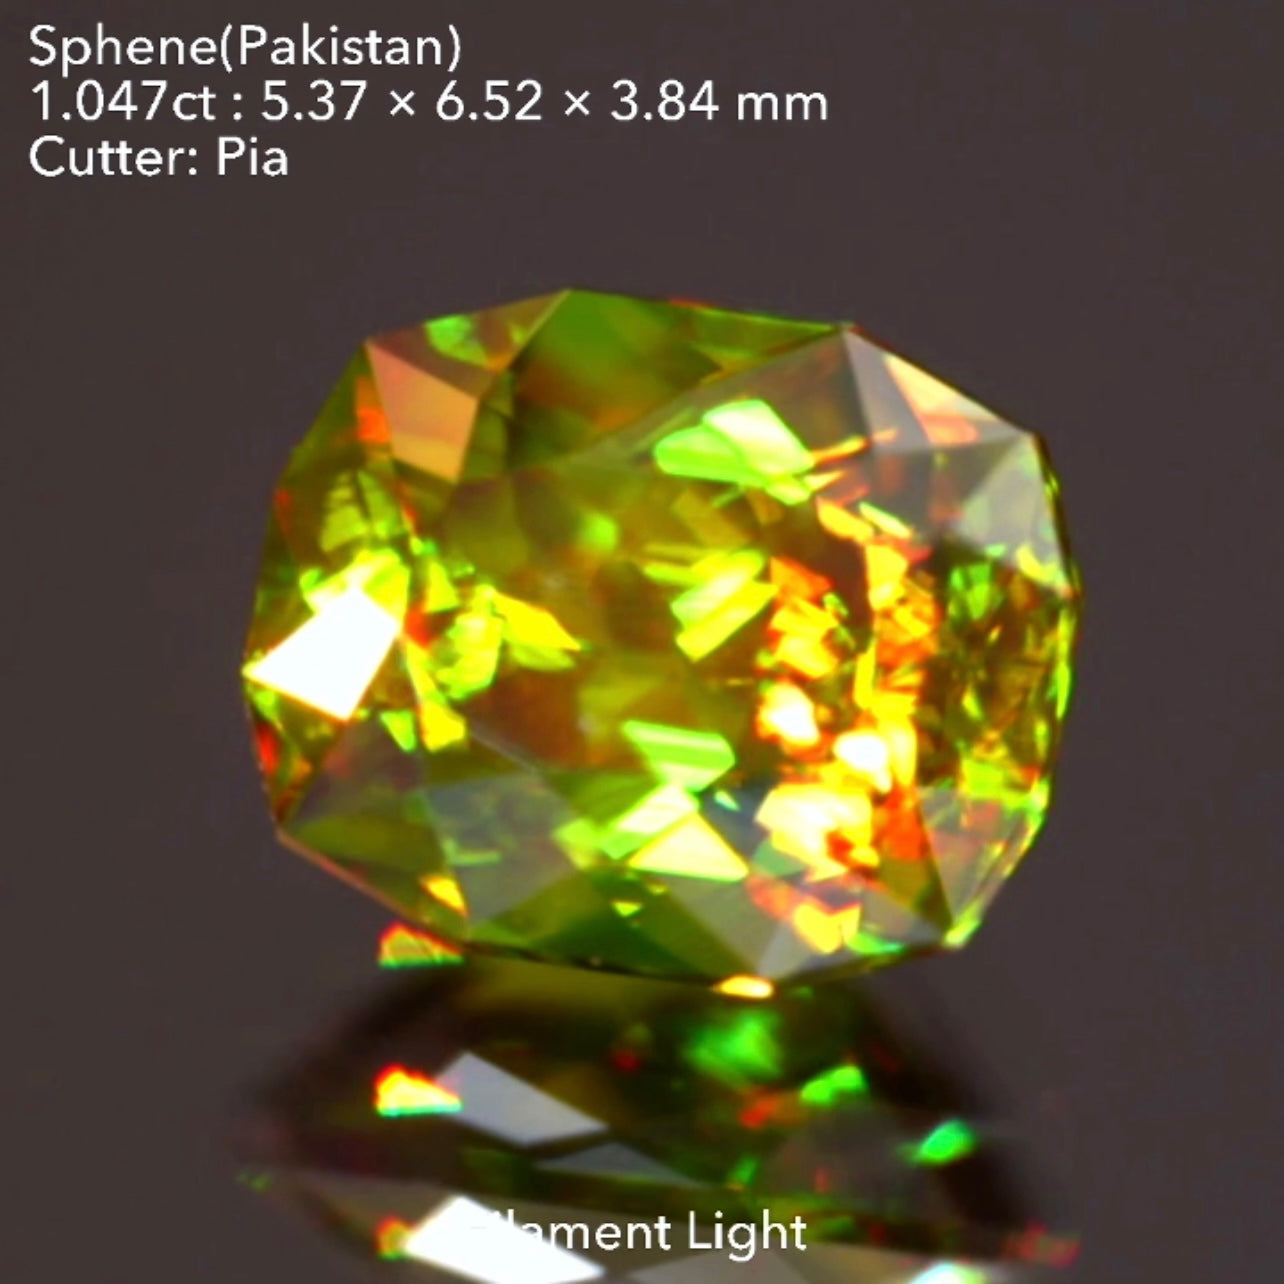 【SOLD OUT】パキスタン産スフェーン1.047ct💎ピアッちゃん作品🌈こちらはお問合せ一番乗り特価でご紹介です♪